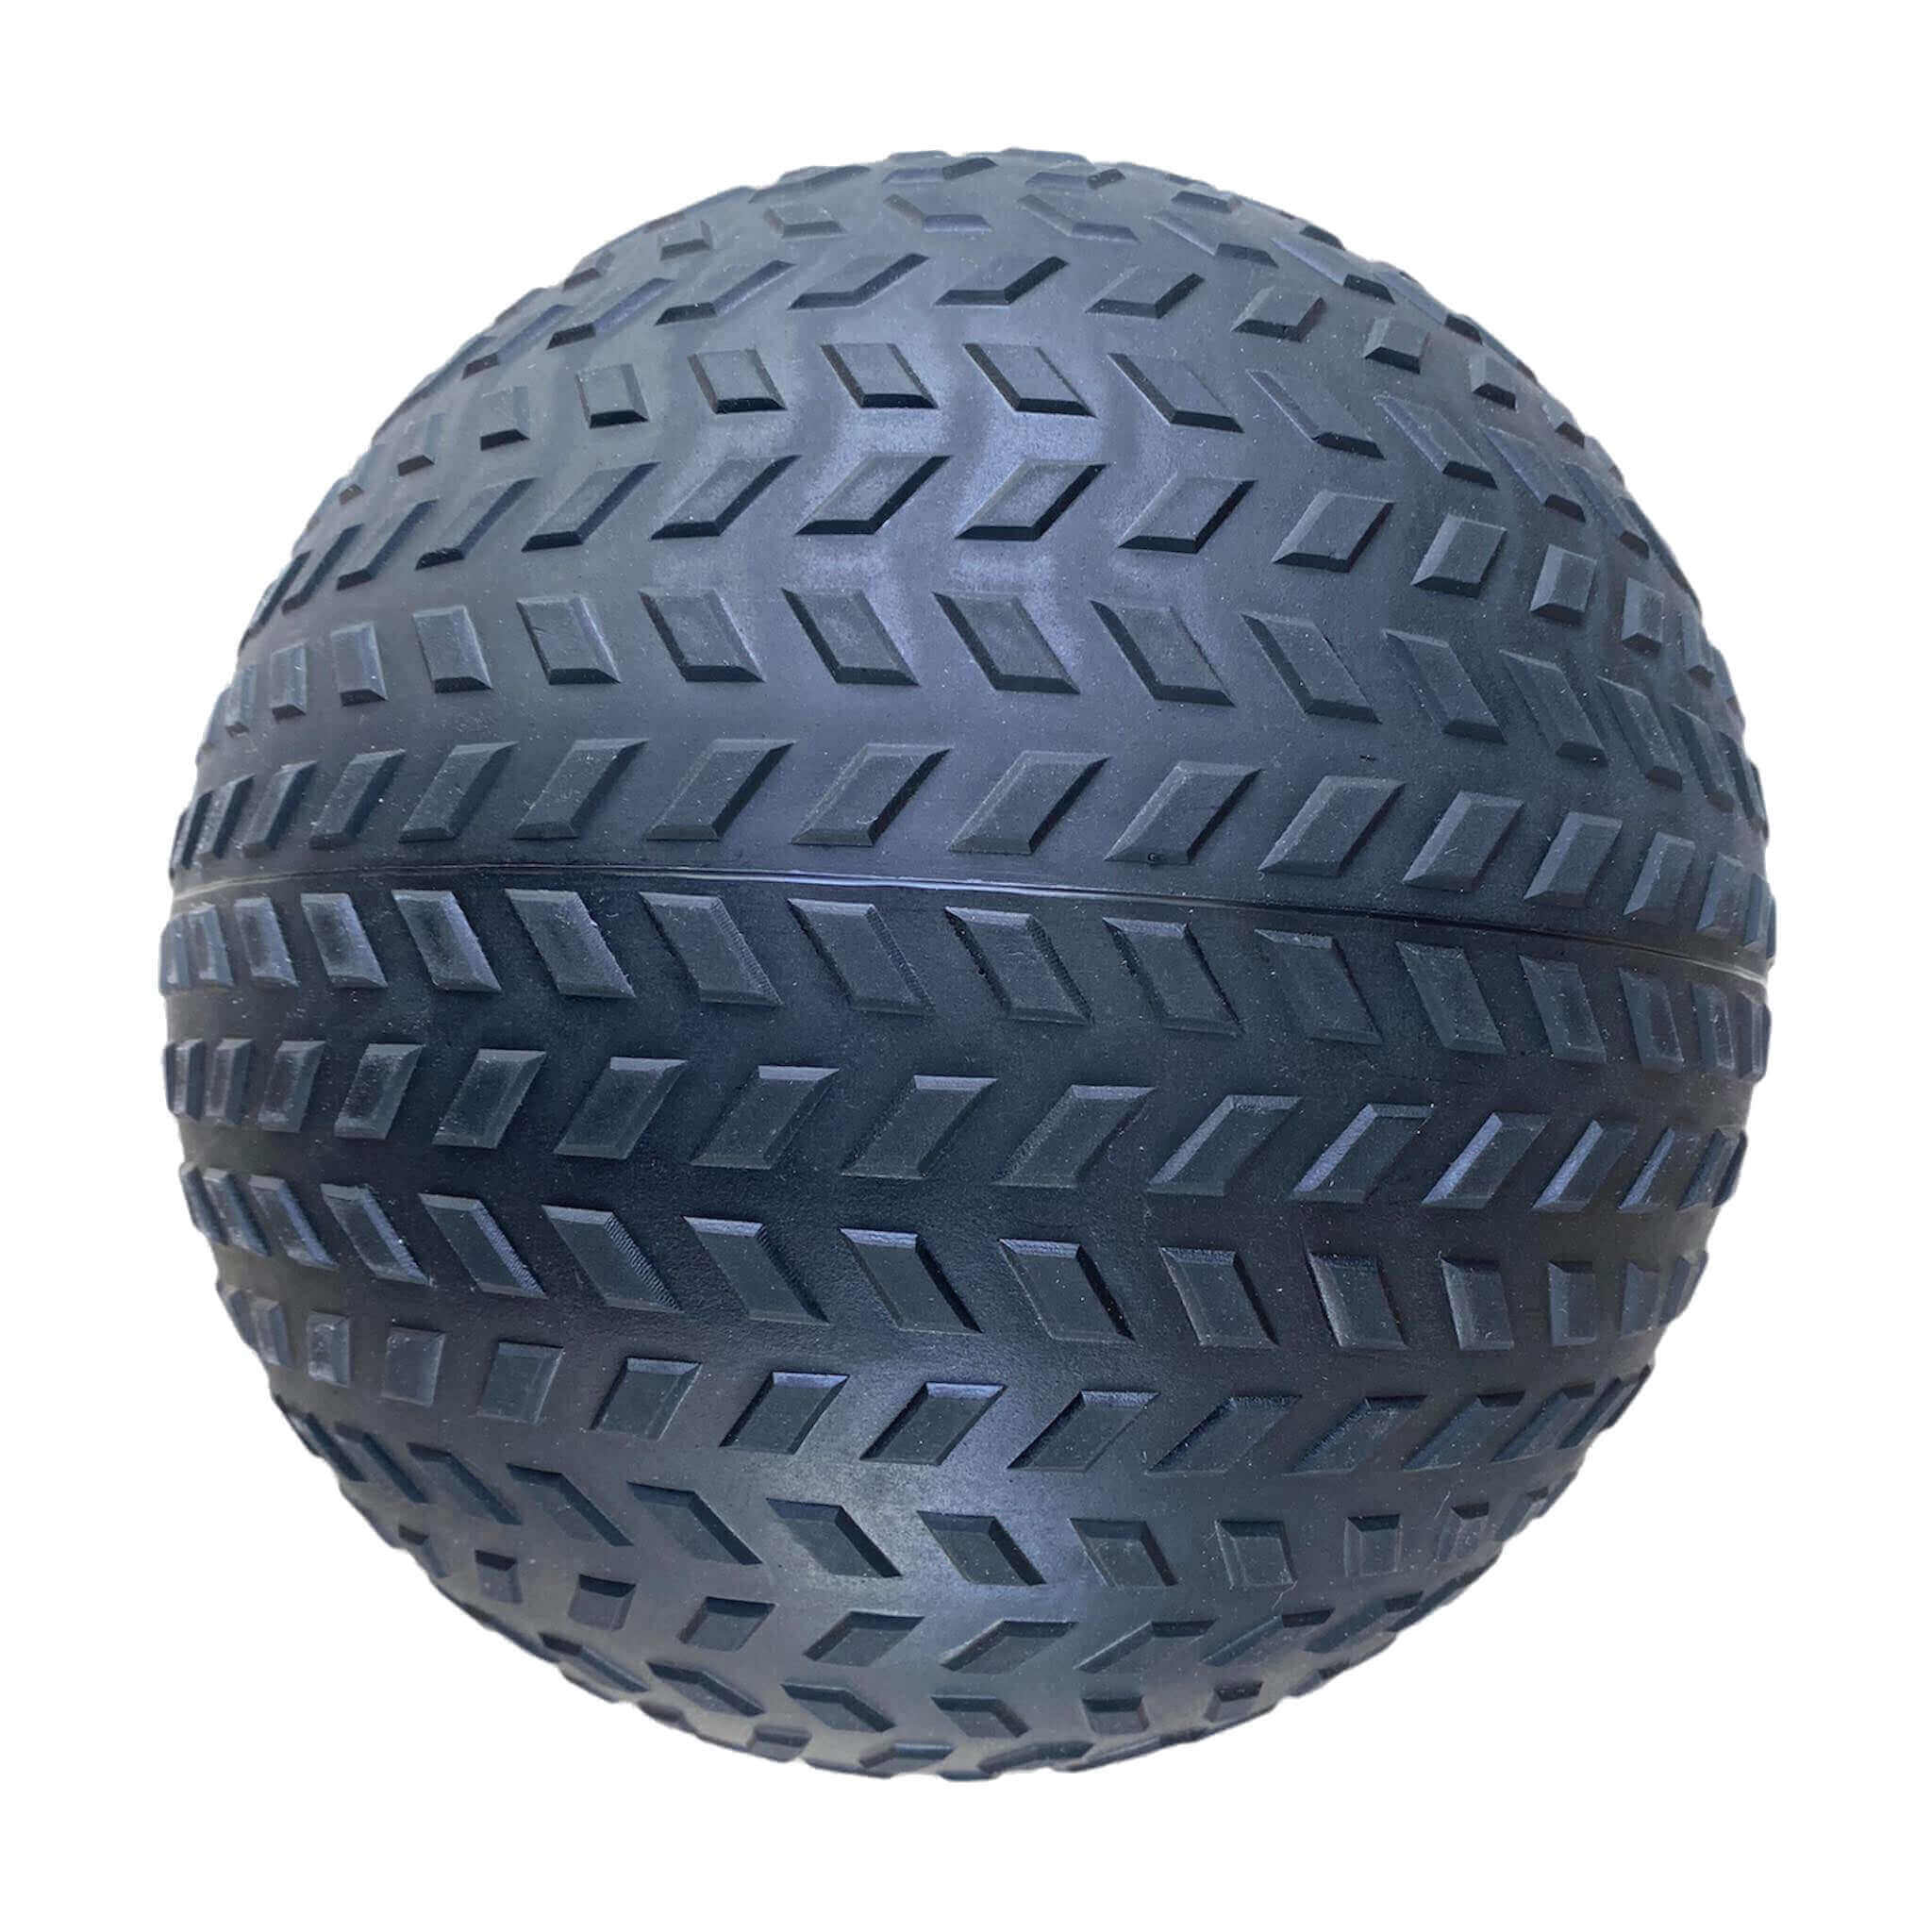 30kg Tyre Thread Slam Balls Fitness Exercise Sand Bag | INSOURCE